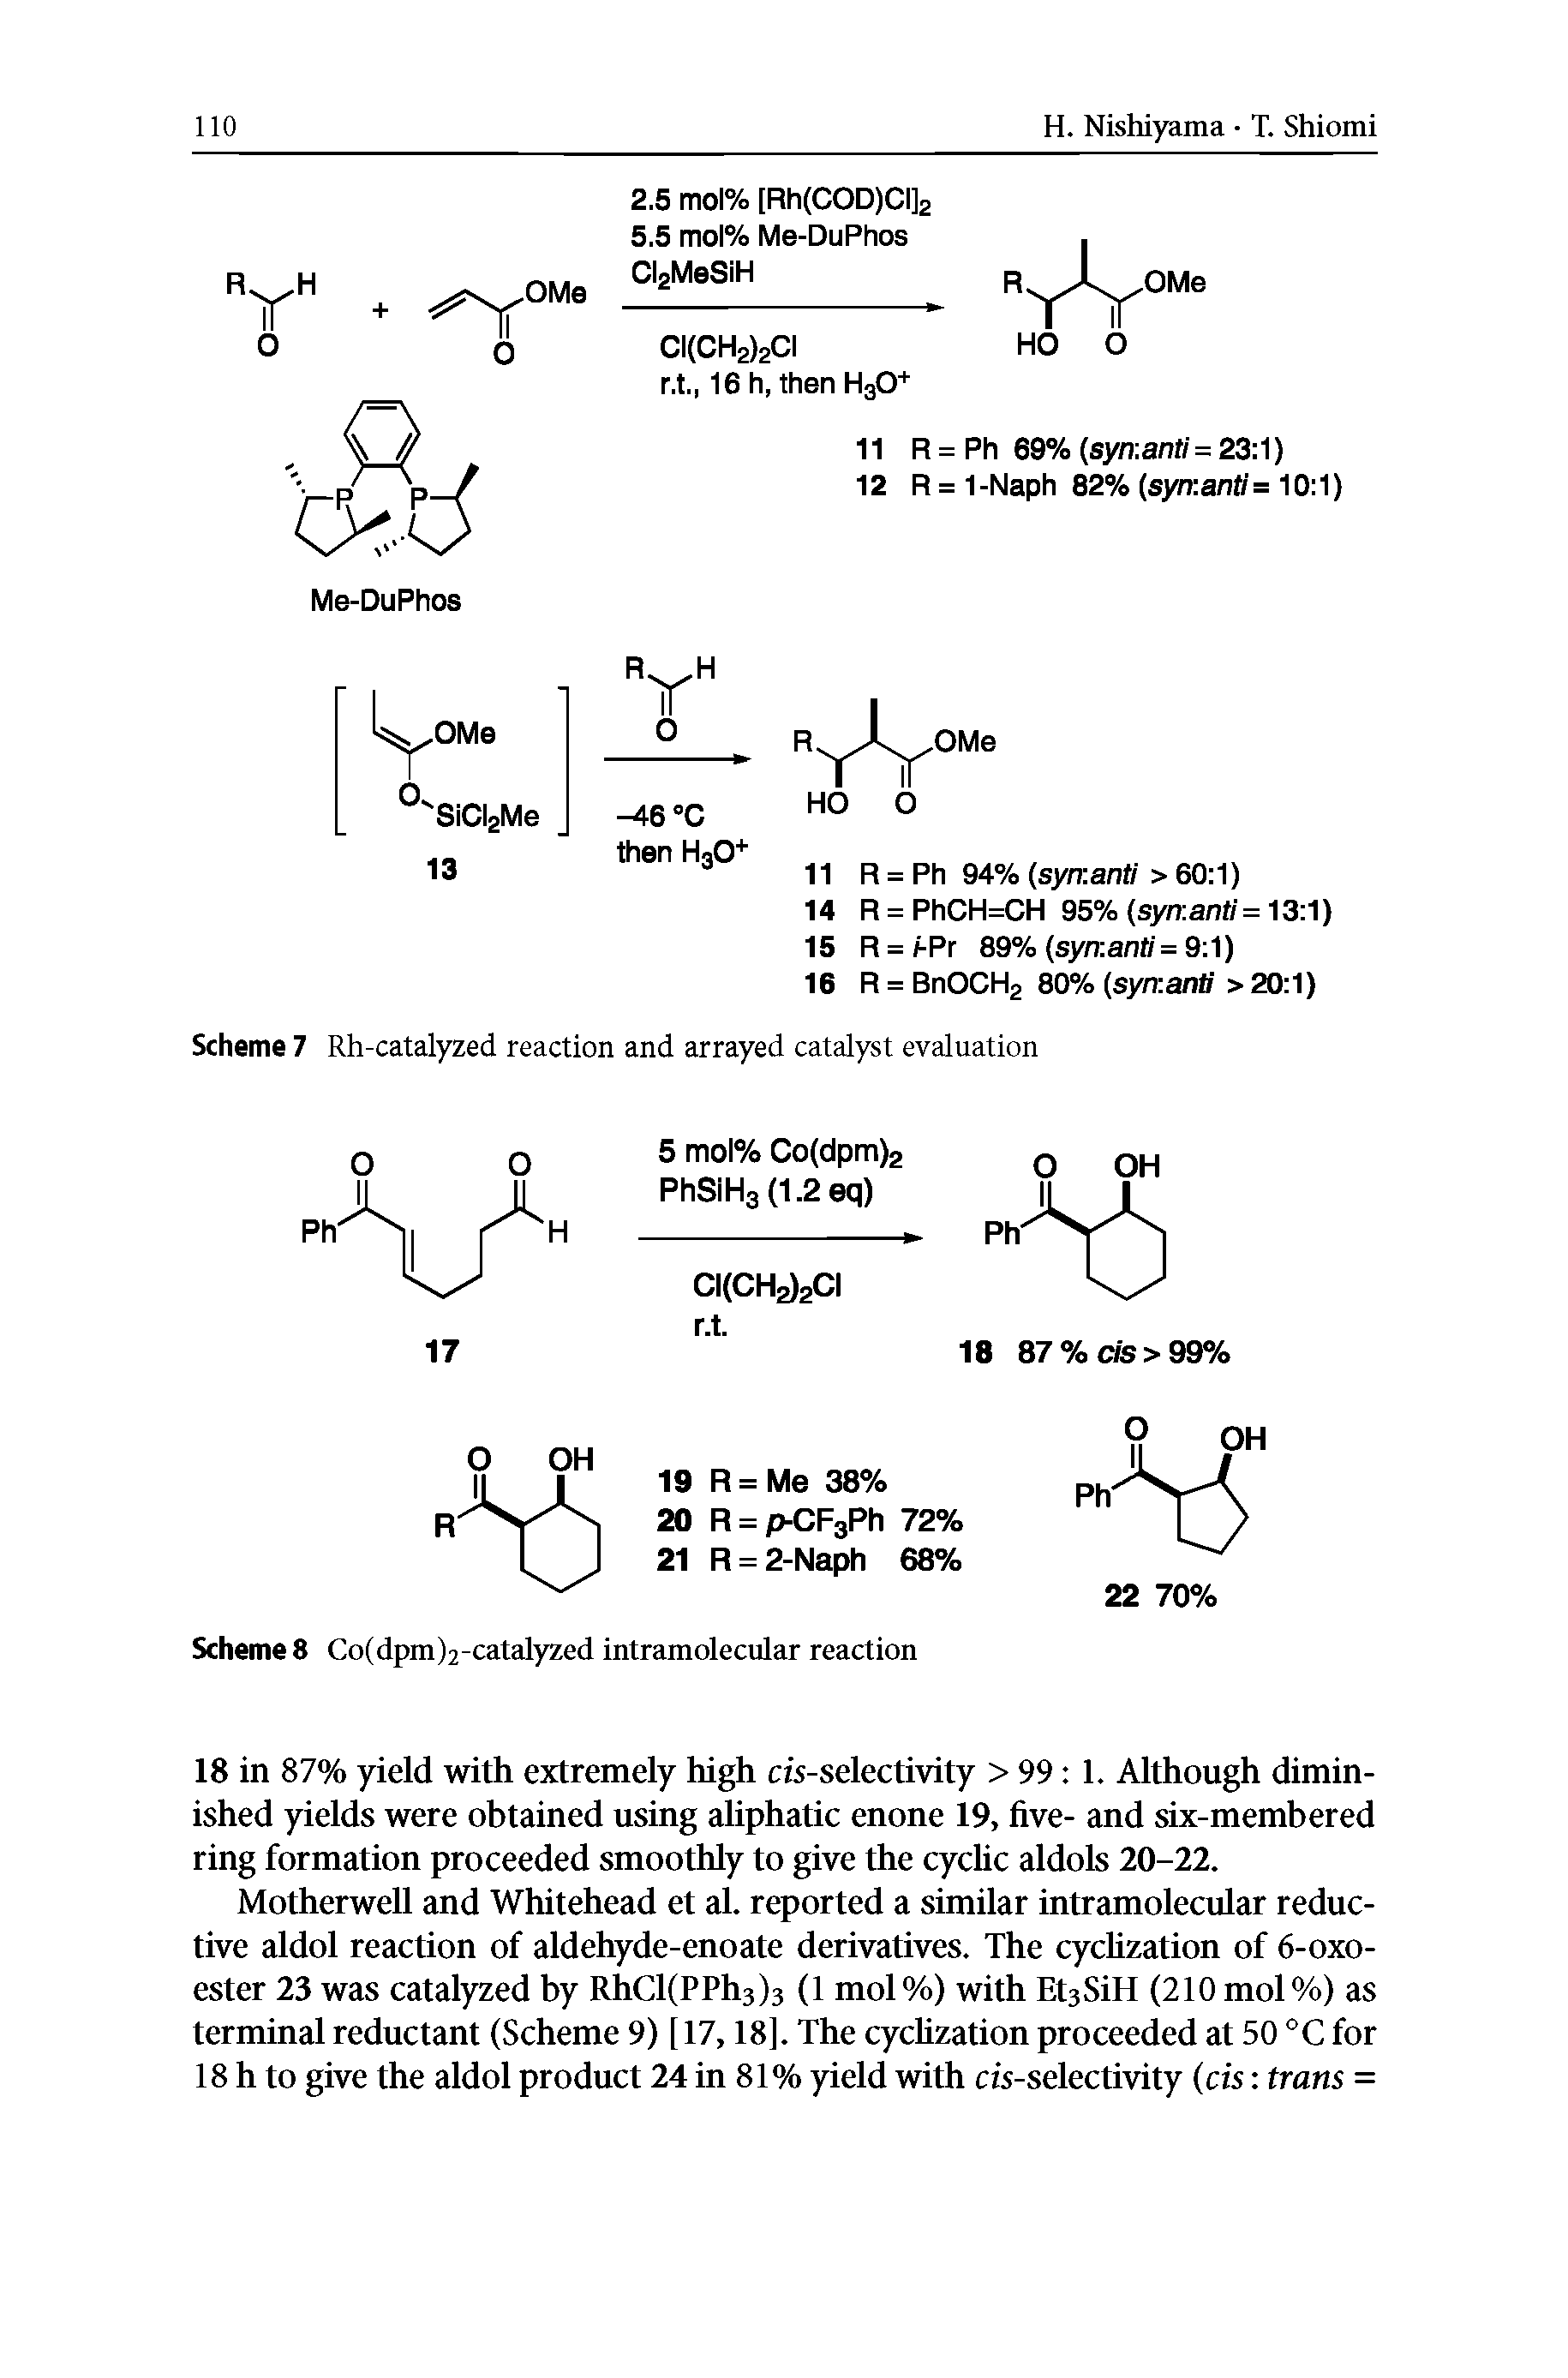 Scheme 7 Rh-catalyzed reaction and arrayed catalyst evaluation...